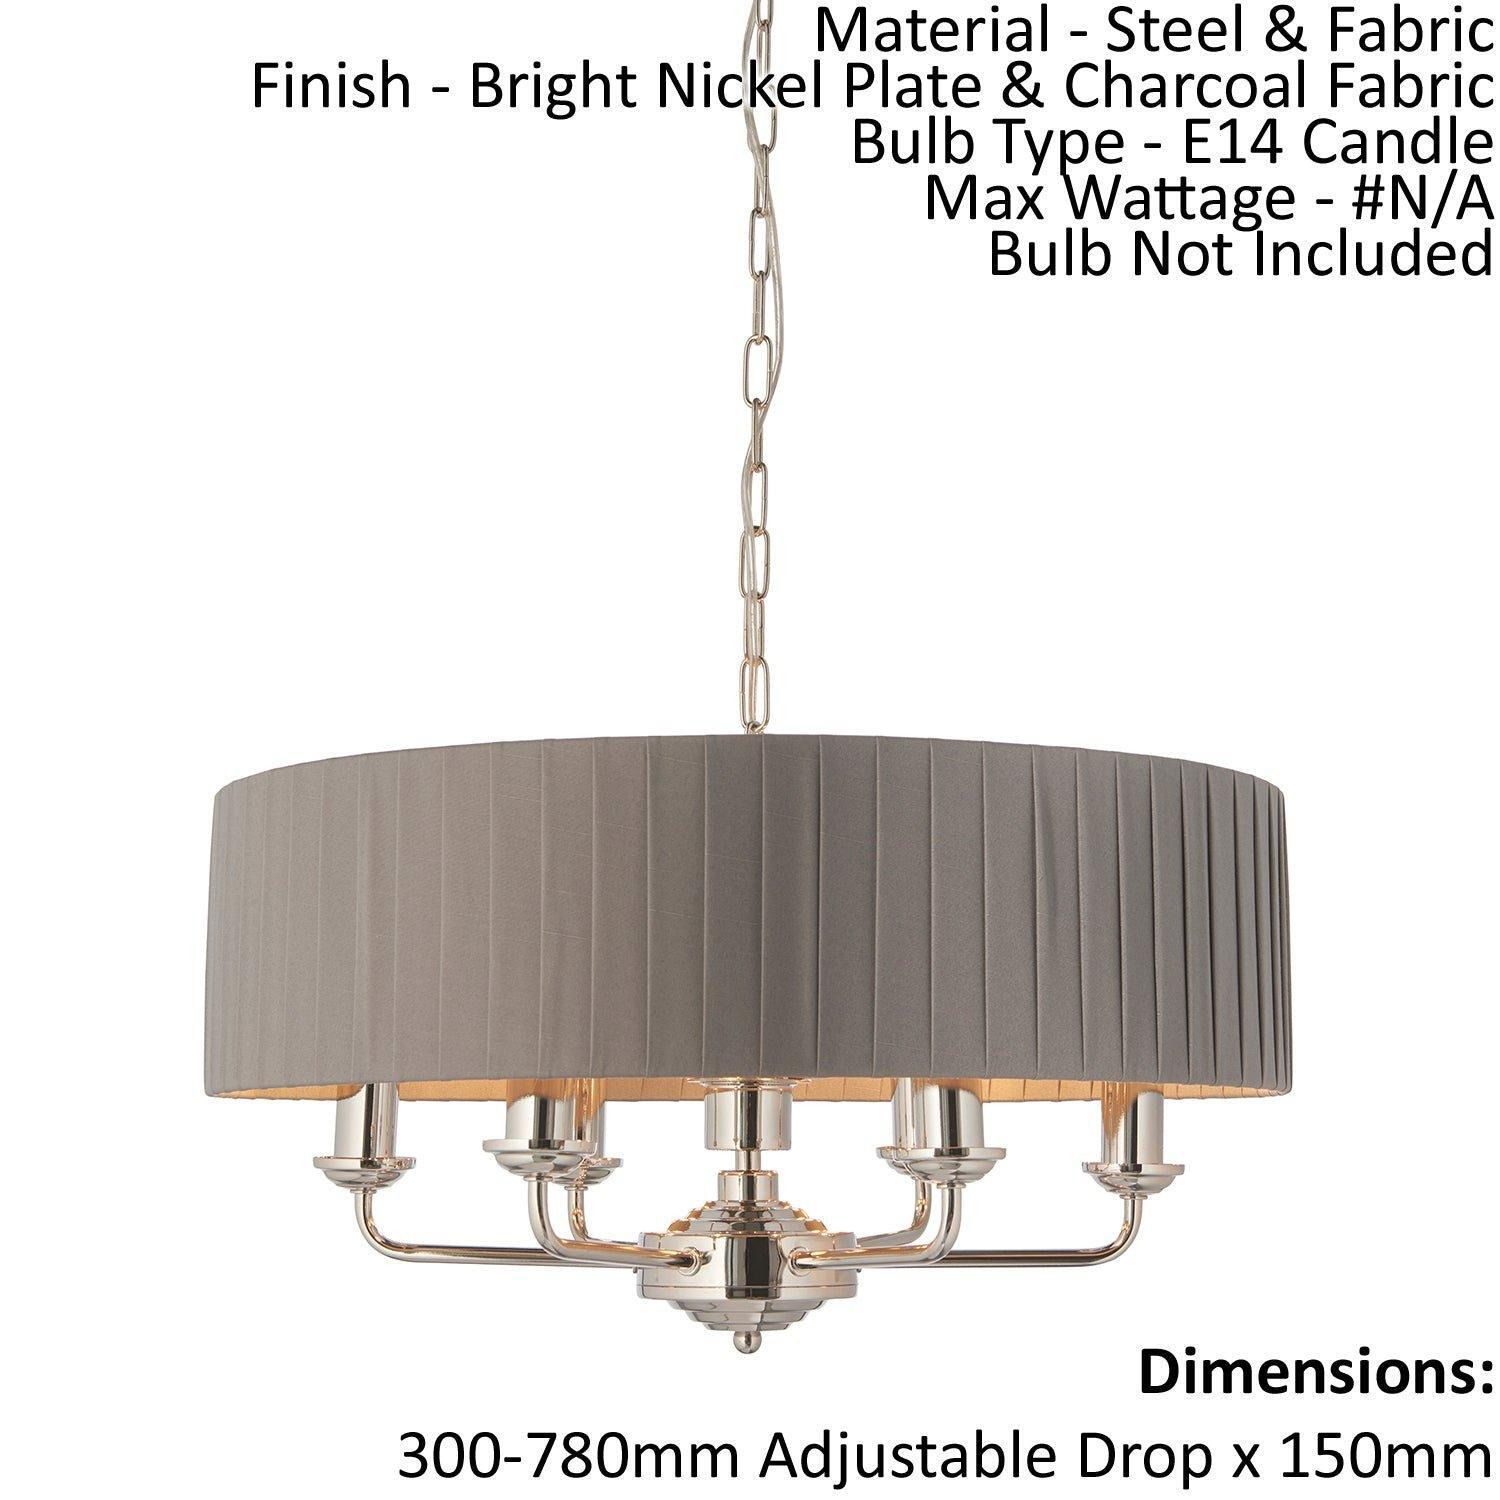 Ceiling Pendant Light - Bright Nickel & Charcoal Fabric - 6 x 40W E14 - e10245 - image 1